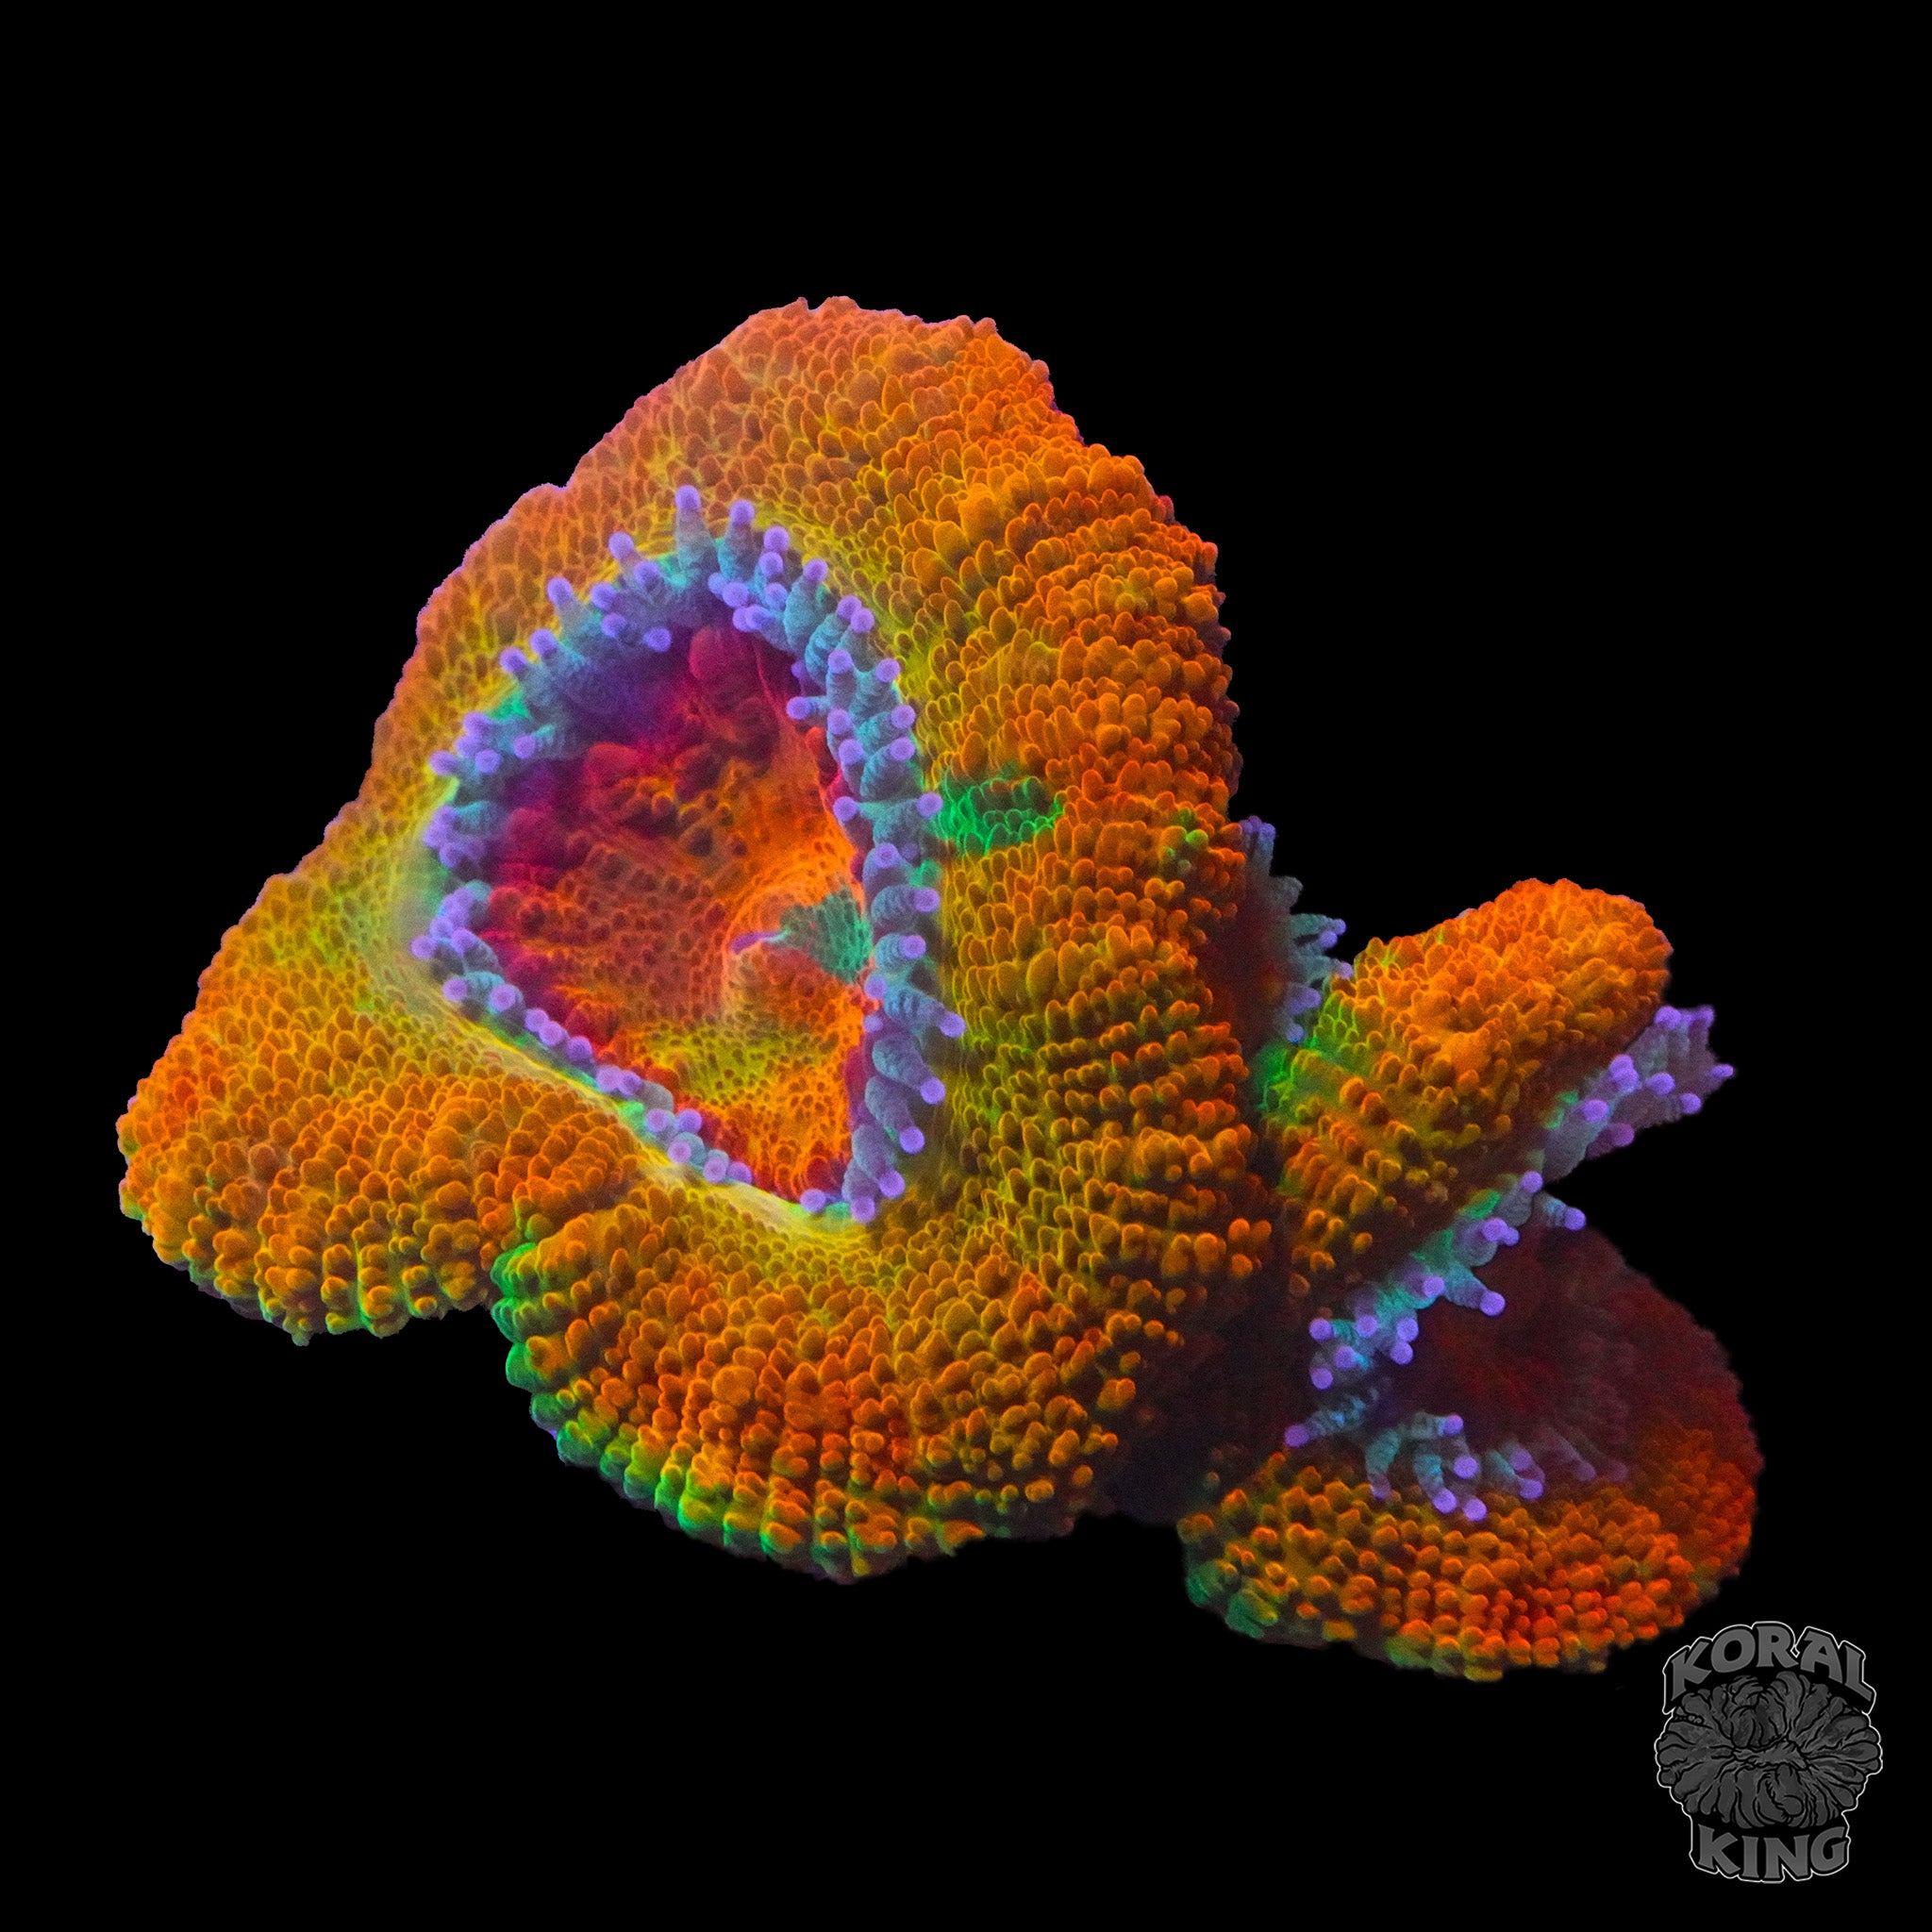 Corals – Koral King